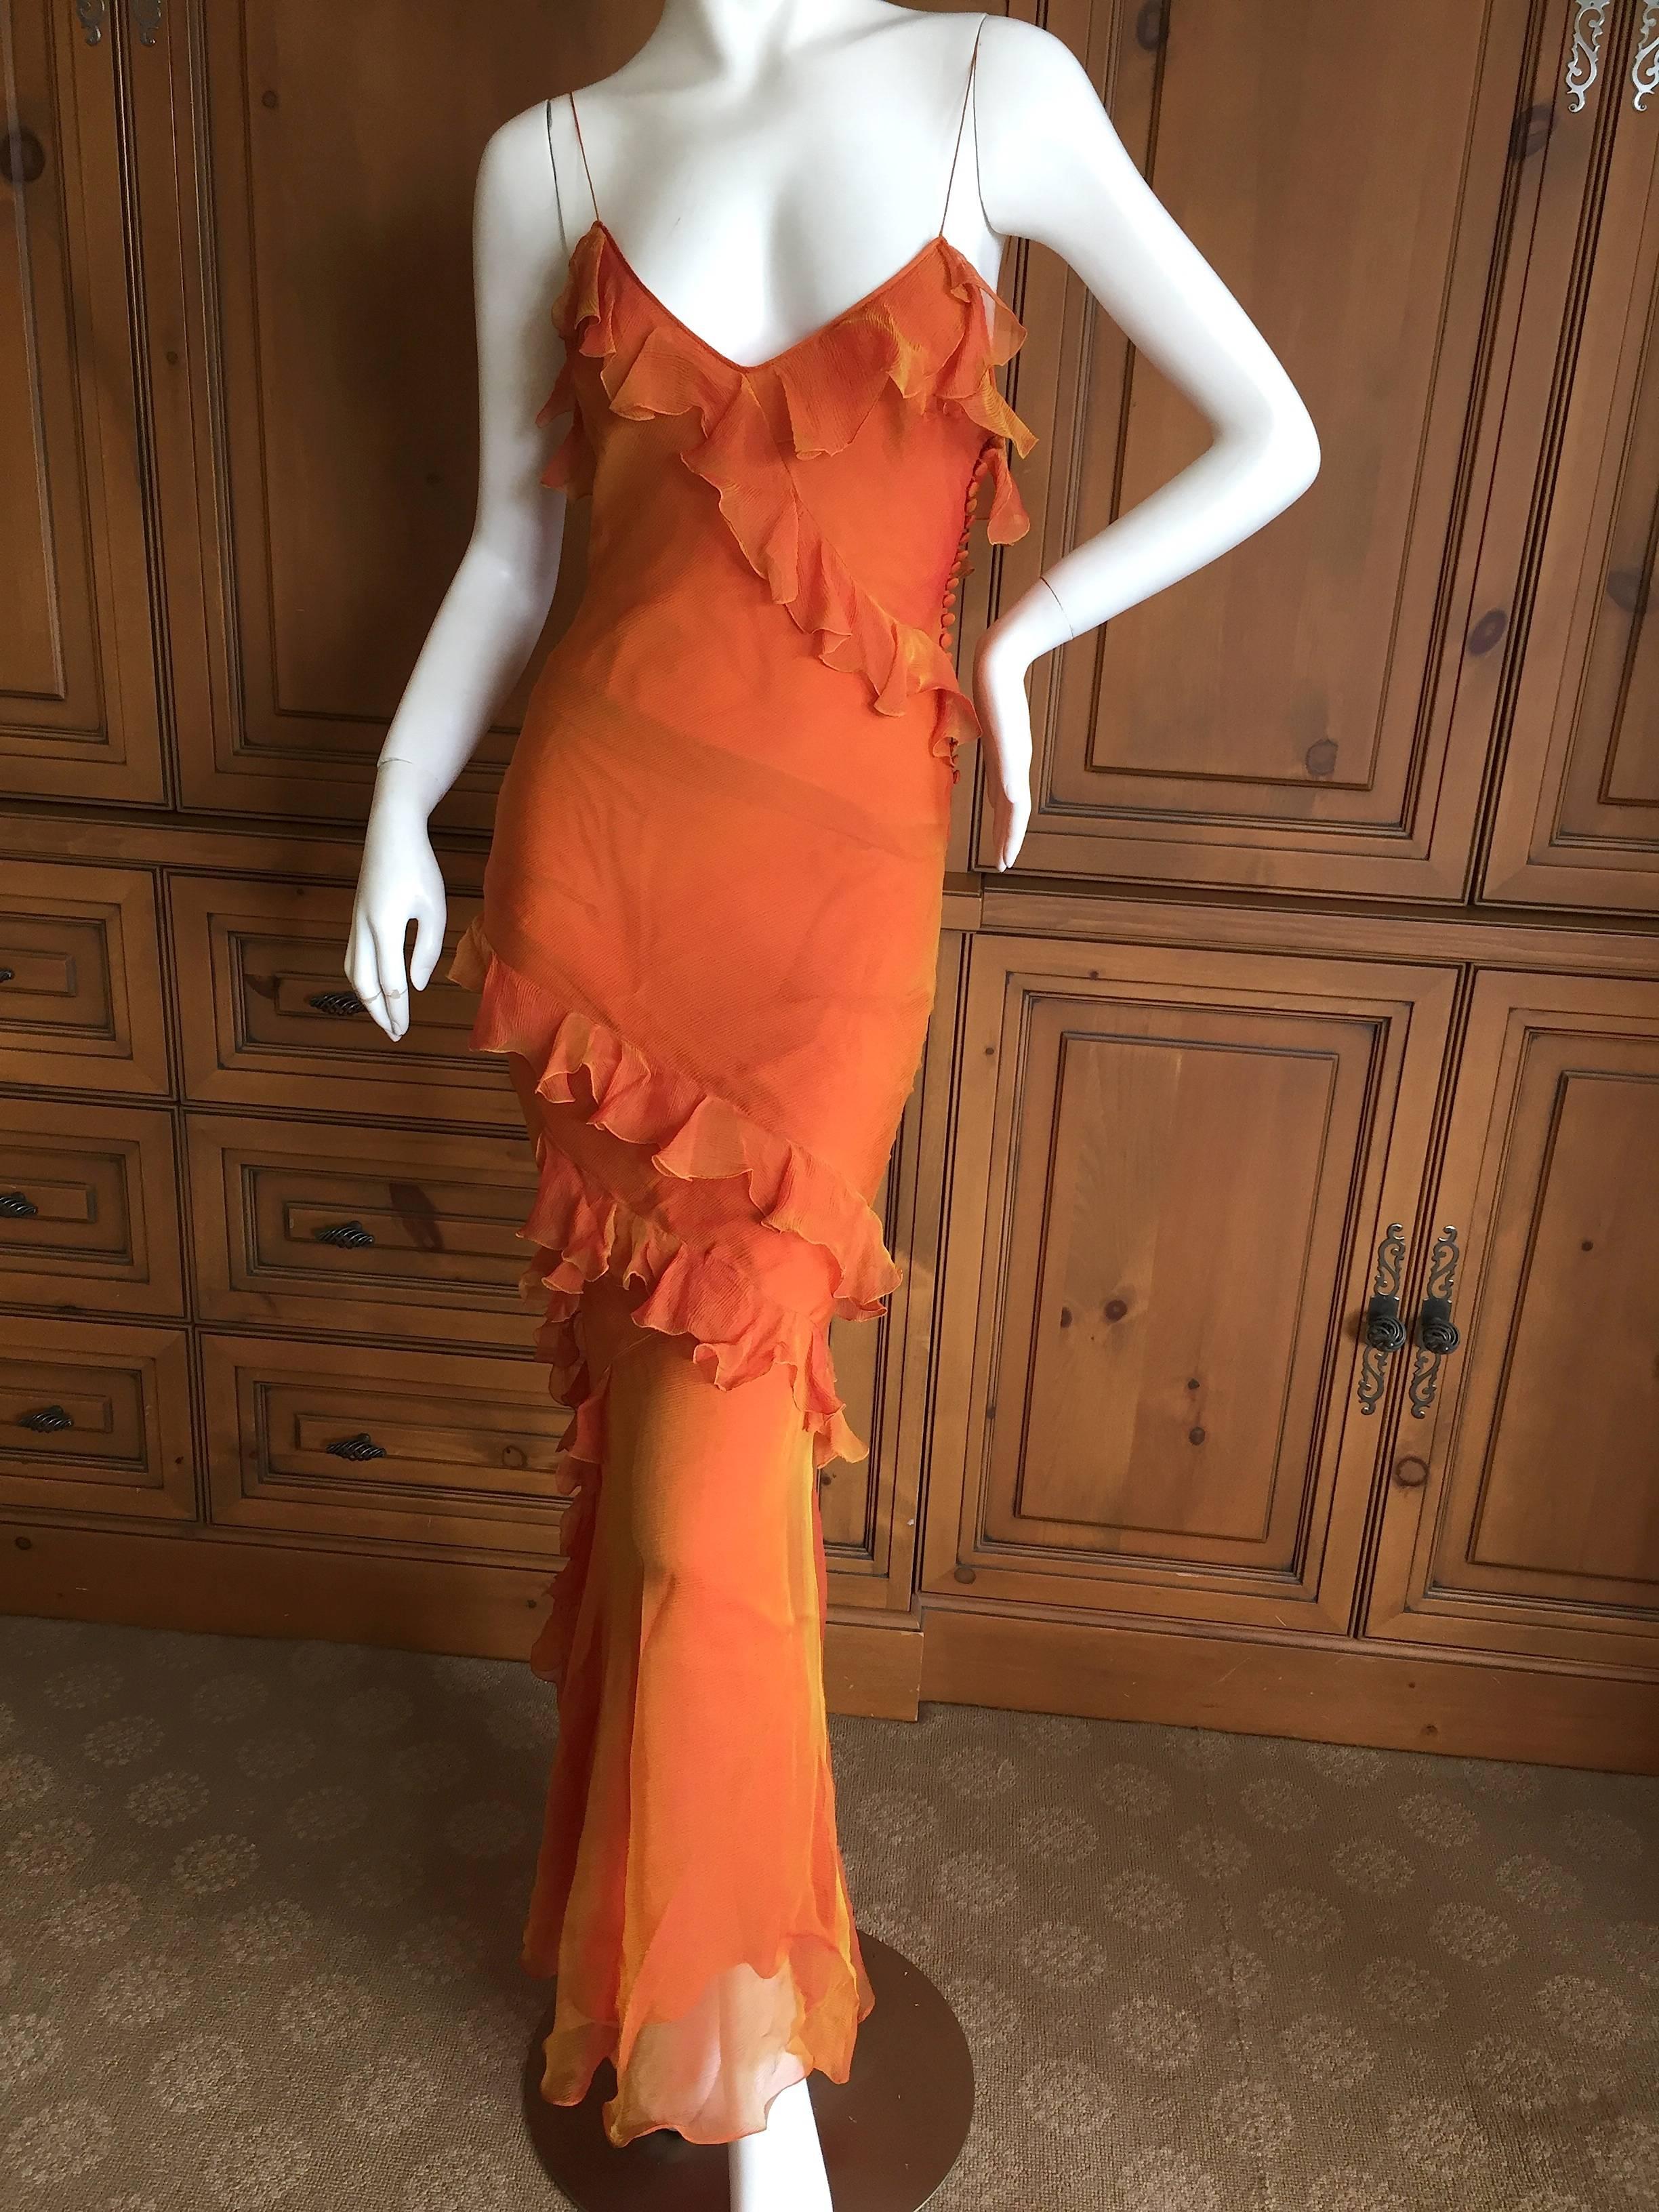 Christian Dior by John Galliano Bias Cut Orange Ruffled Dress.
This is so pretty, trailing ruffles of silk chiffon.
 Size 8 

Bust 36